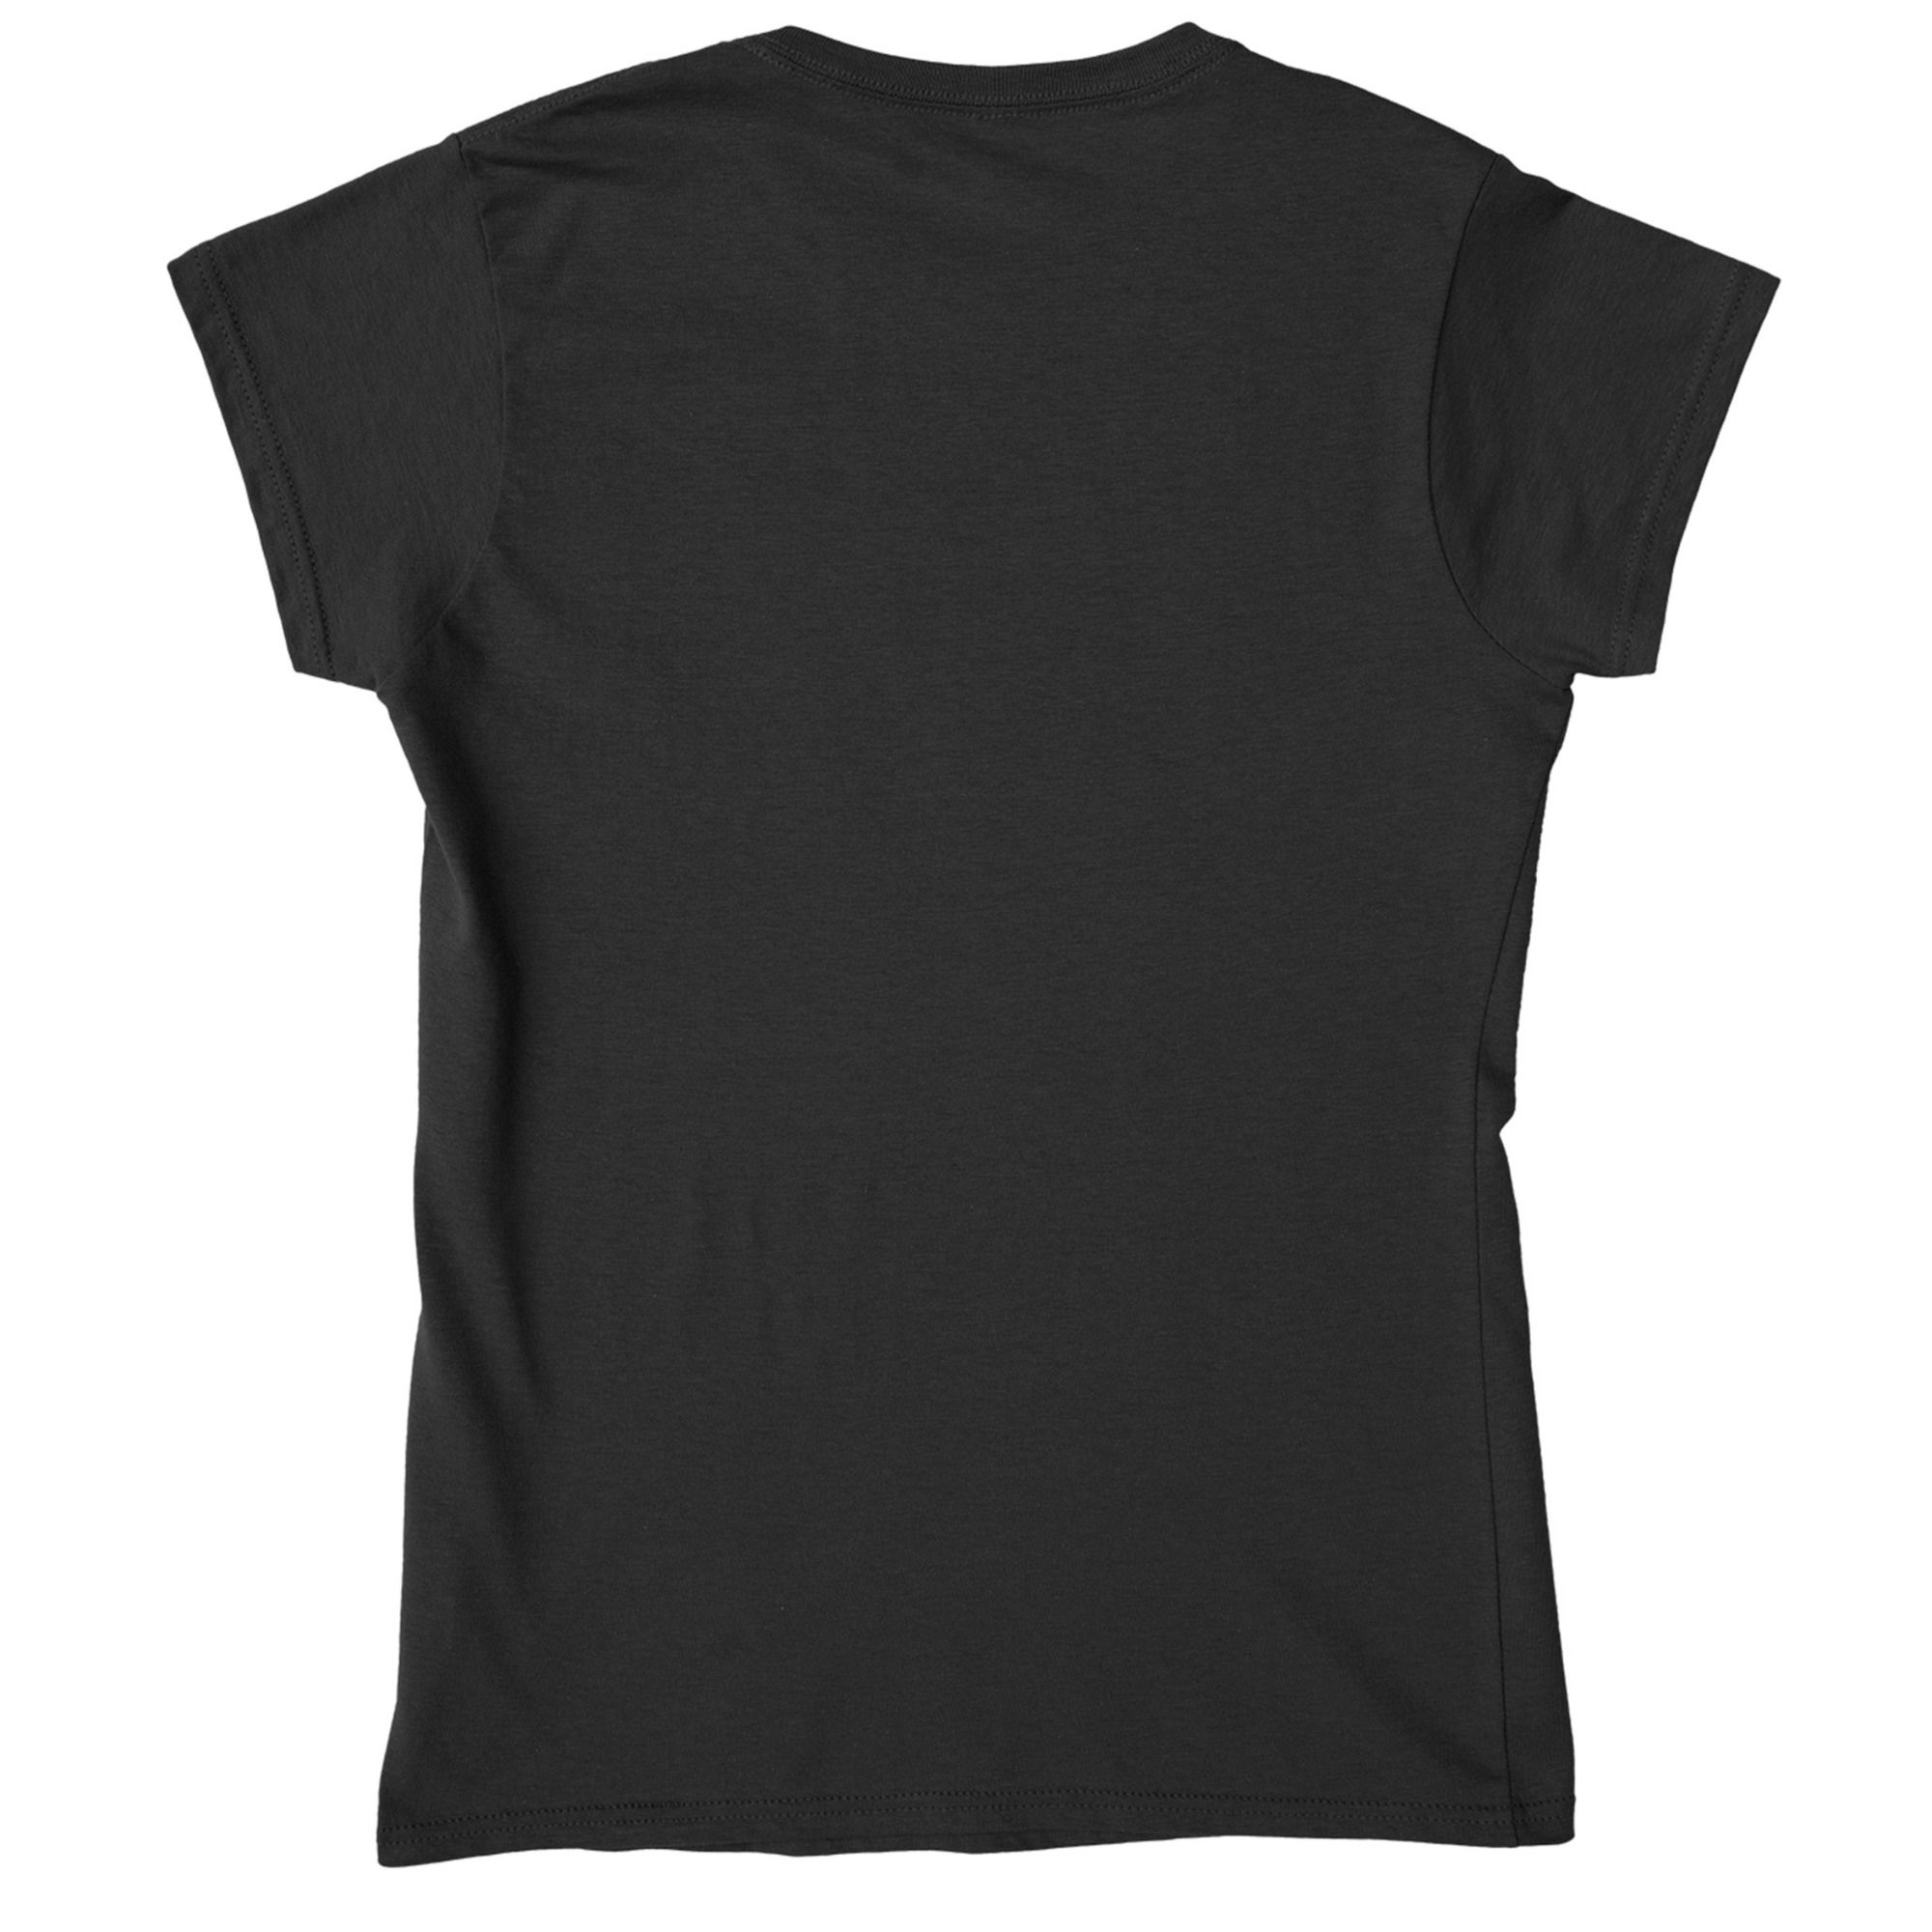 Scorpion - Women's Fit T-Shirt